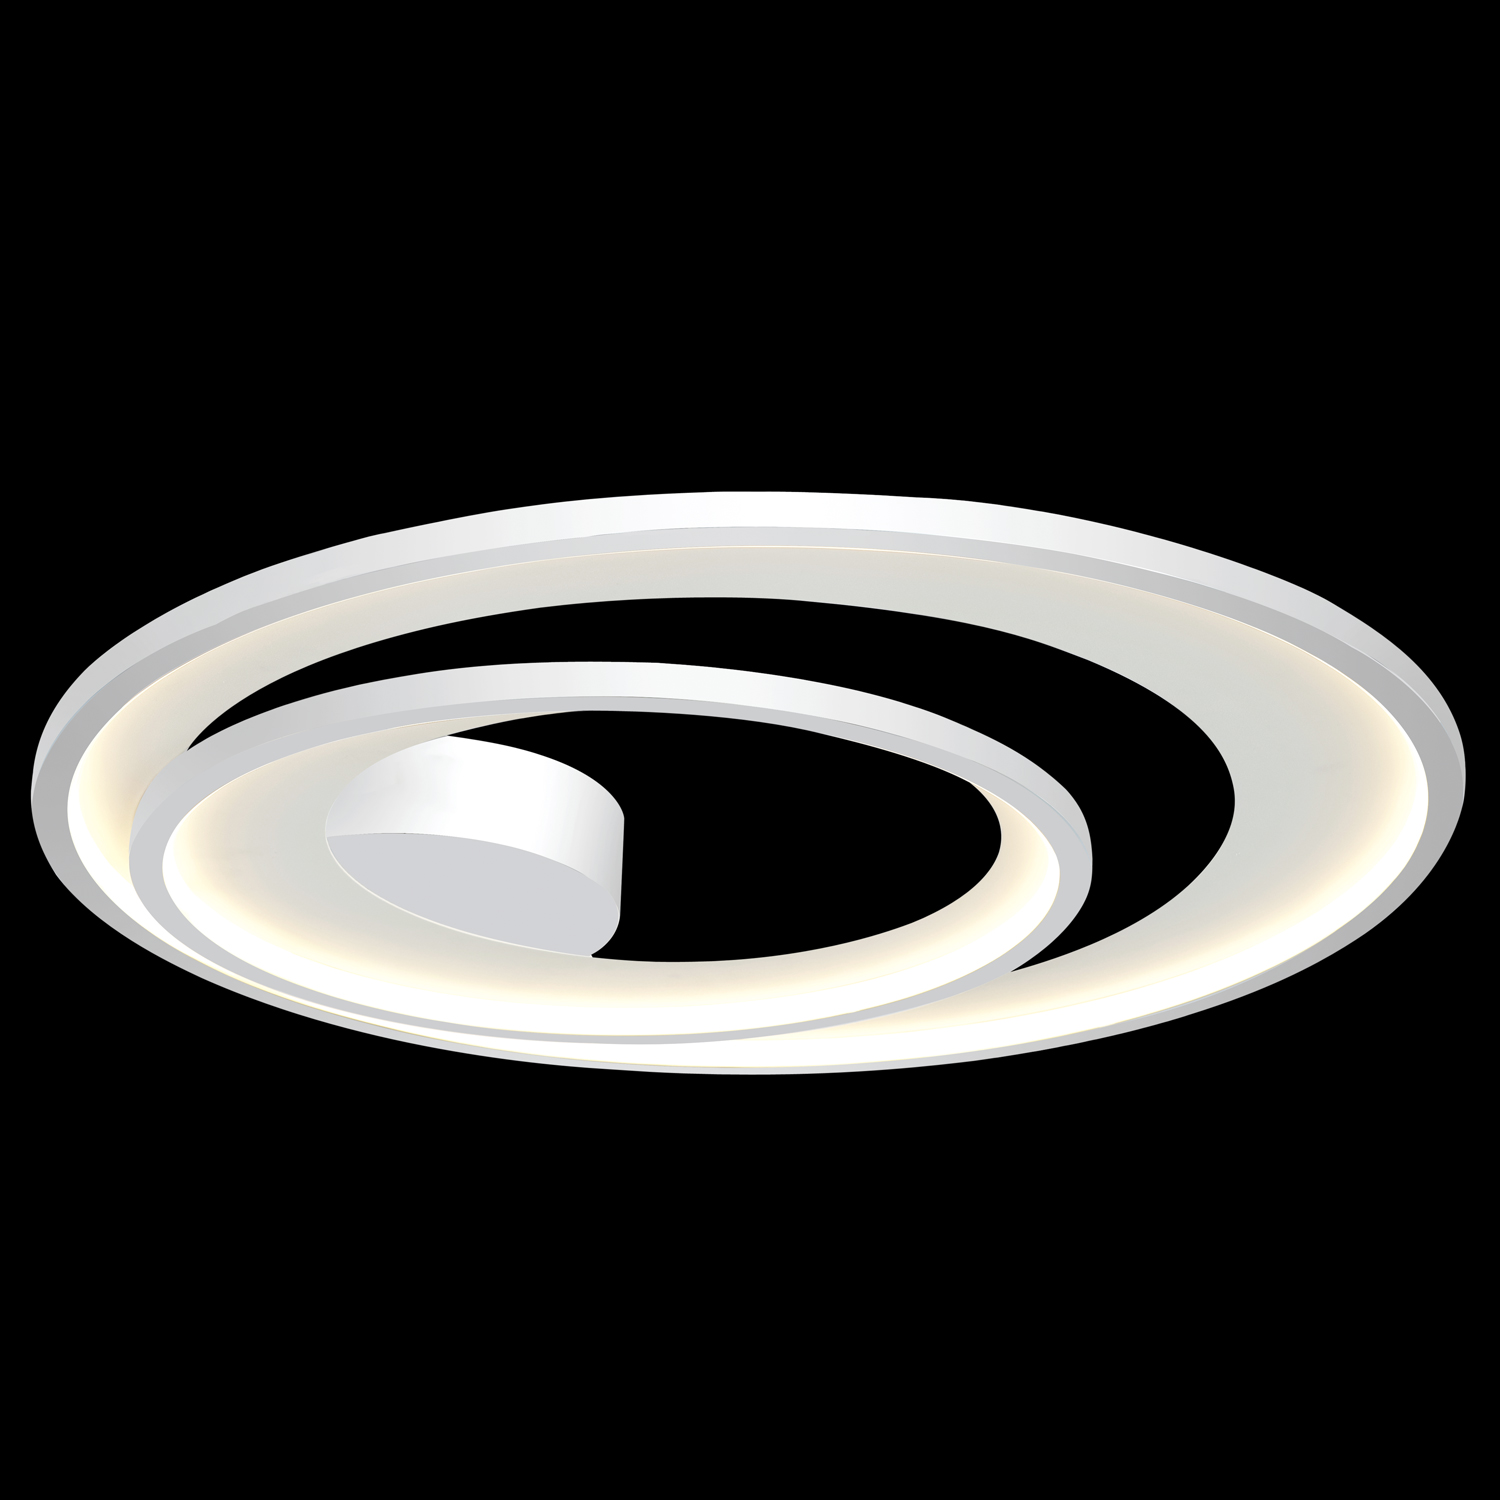 Luxury White Double Ring Ceiling Light